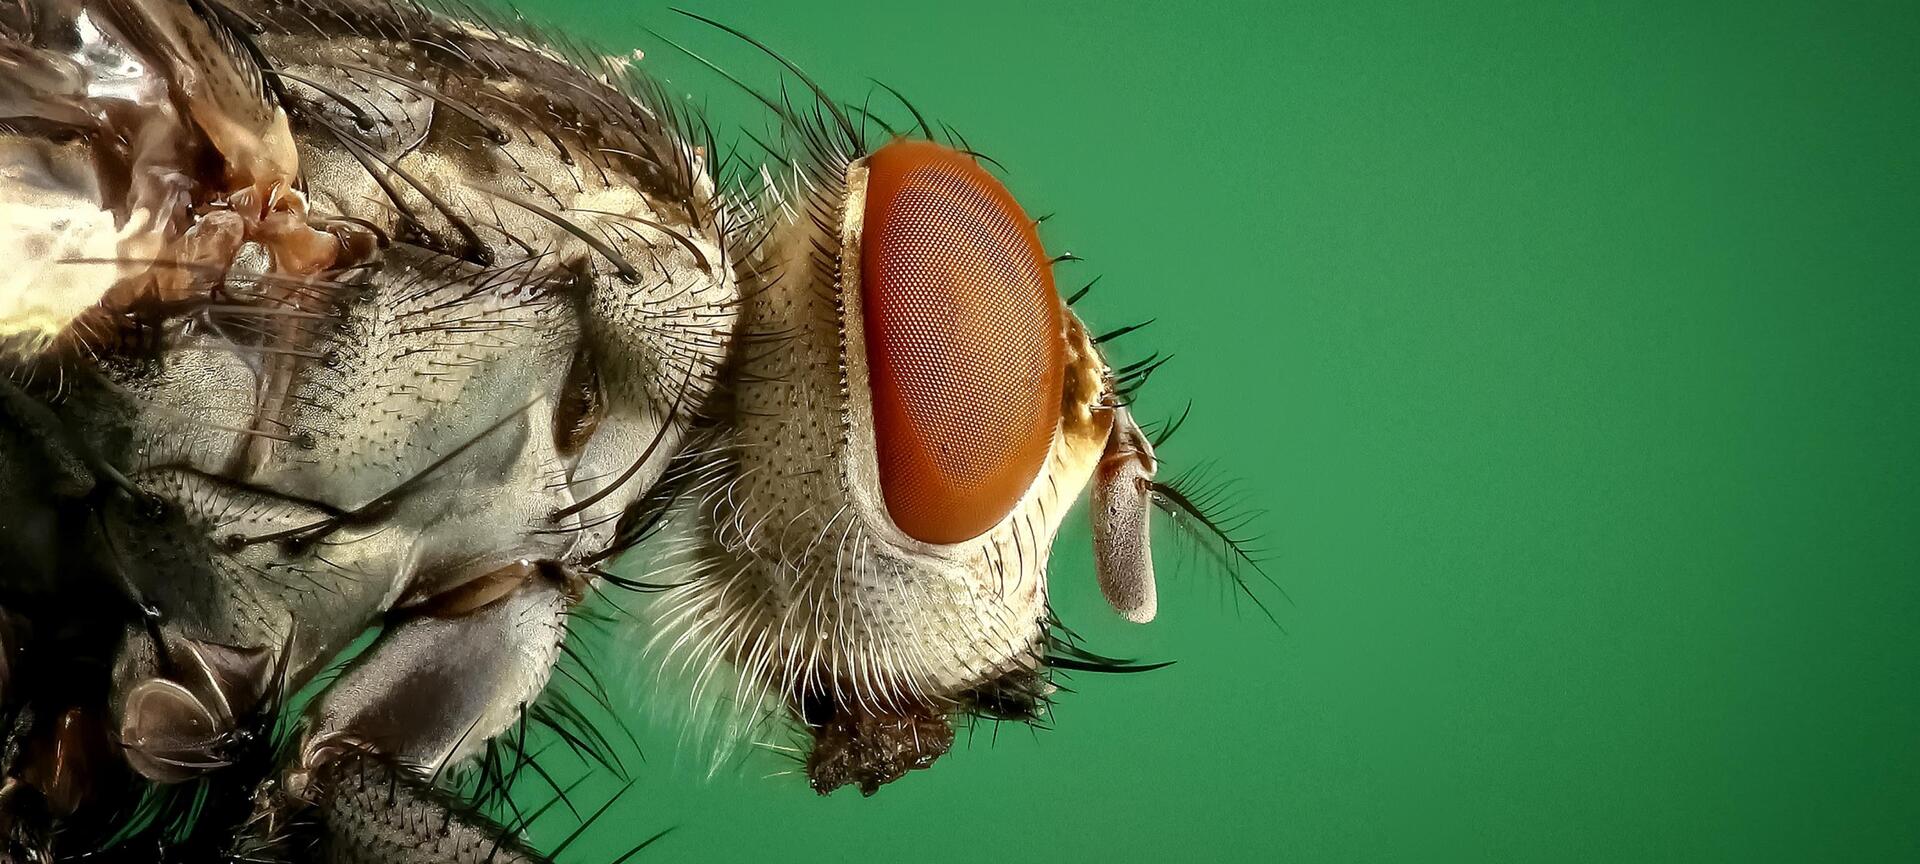 Entomopolis "Fascinerende microkosmos" - Insect